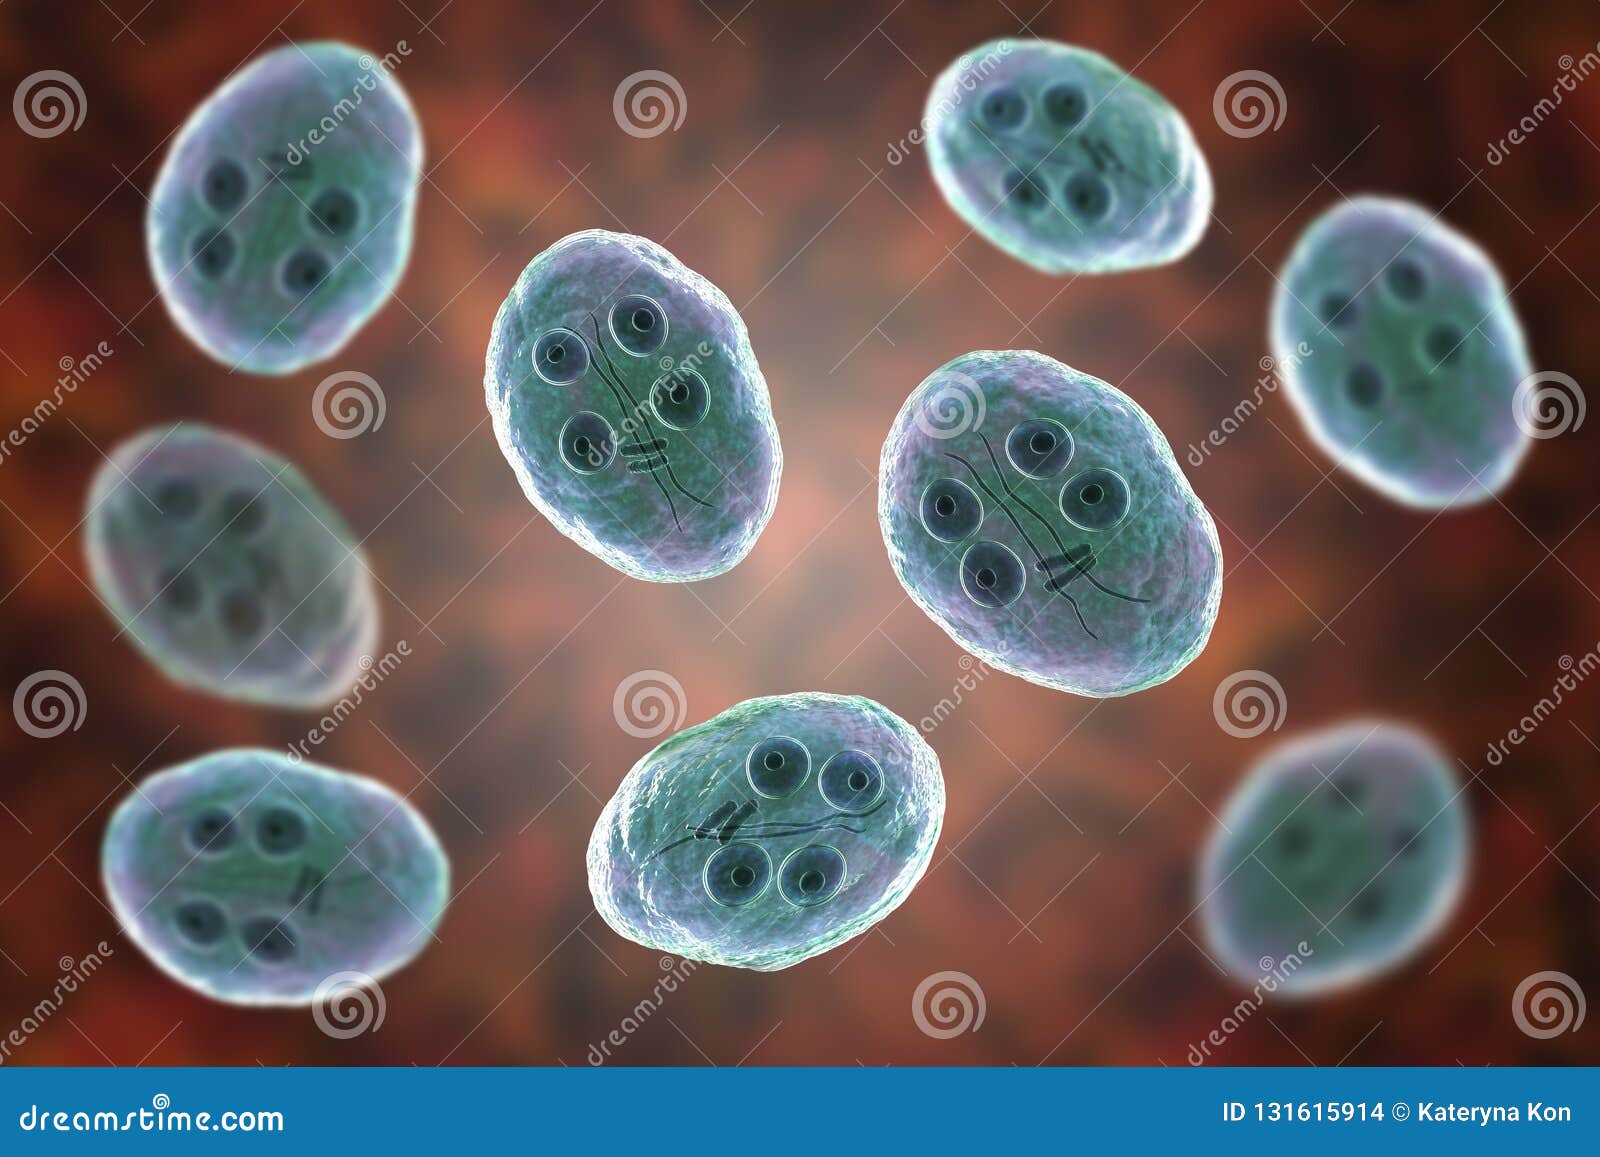 Giardia bacteria symptoms - Gombák szaprofitok vagy paraziták